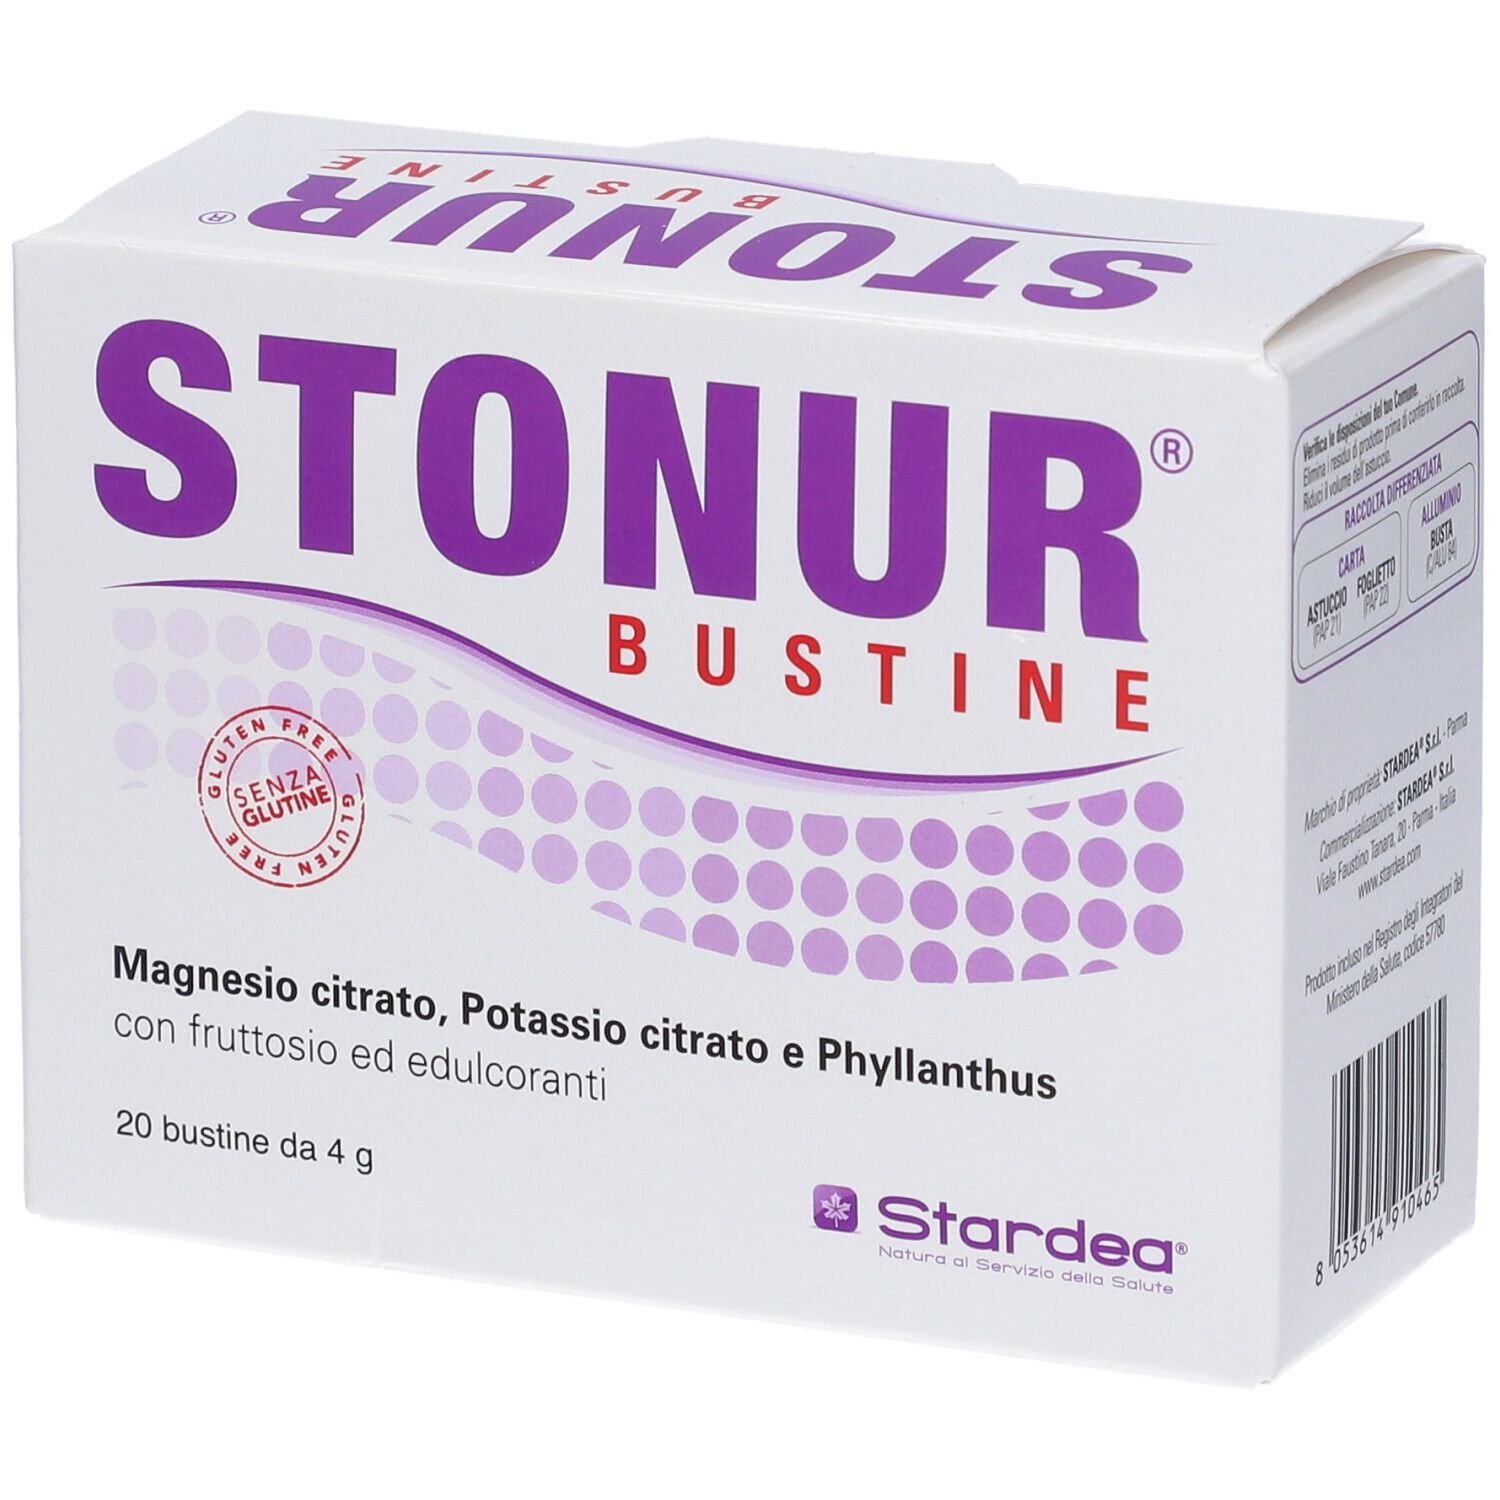 Stonur® Bustine